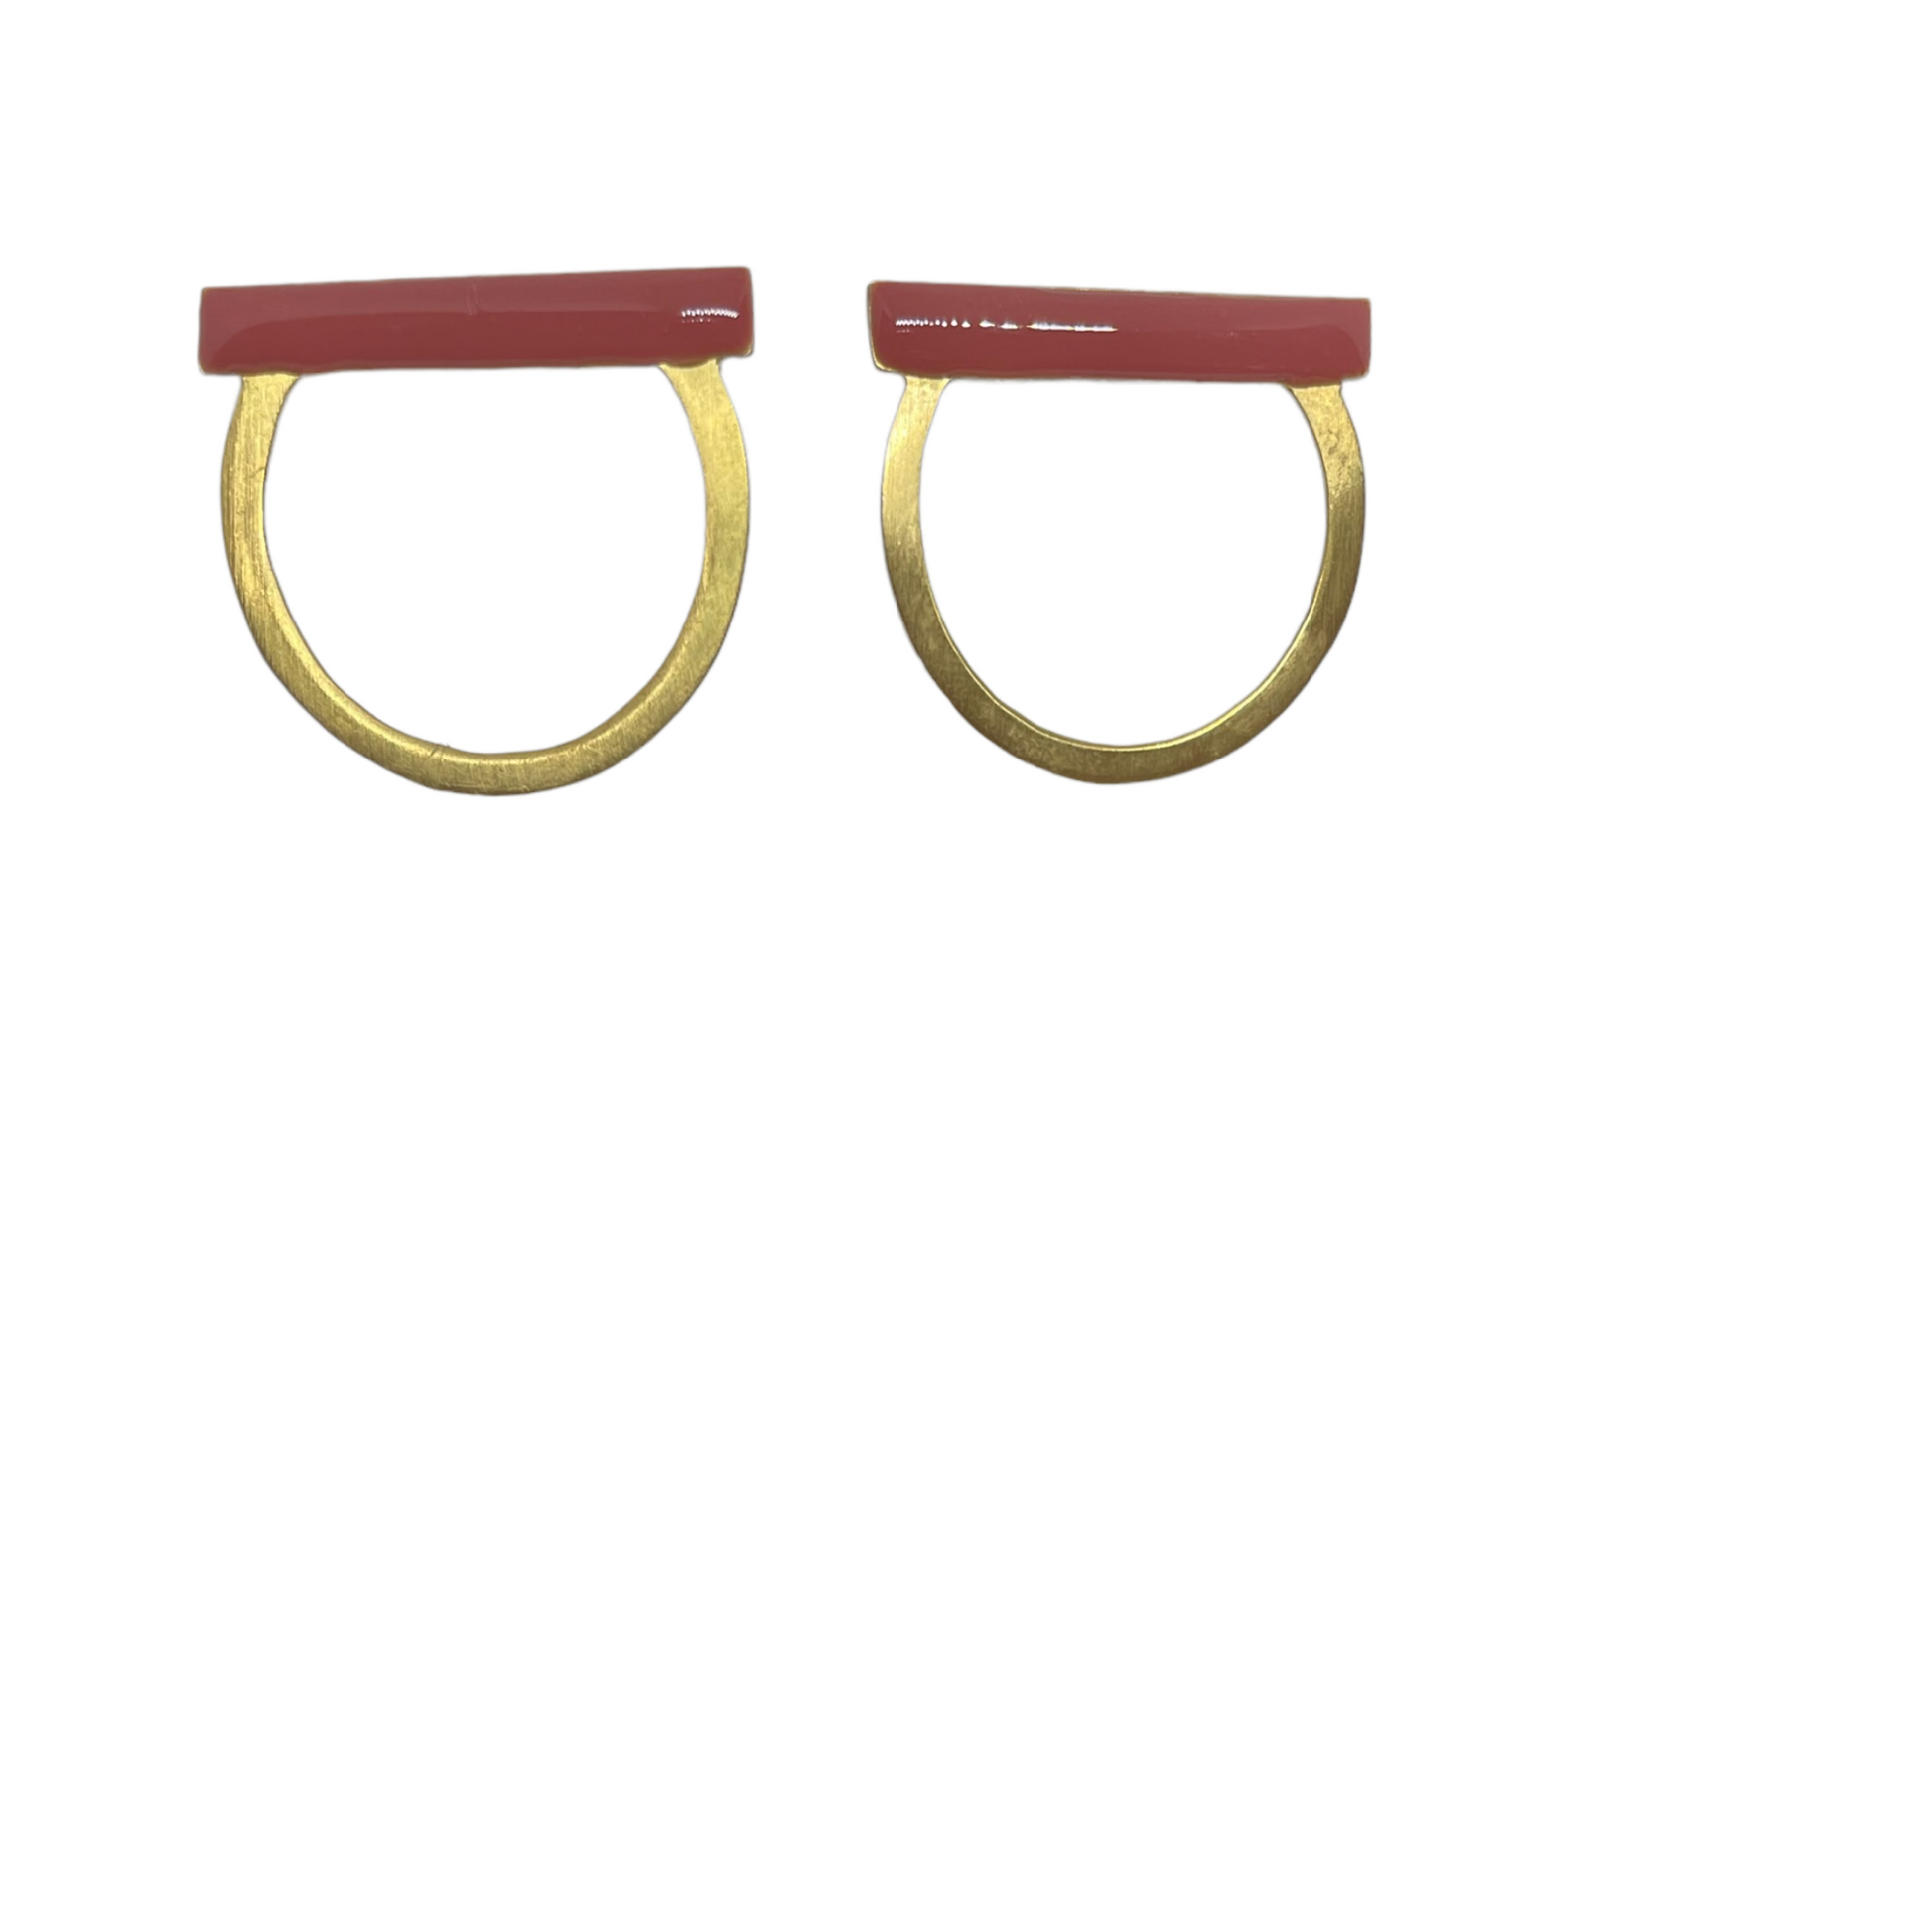 Brass earrings with resin | Eclipse Earrings - CURIUDO